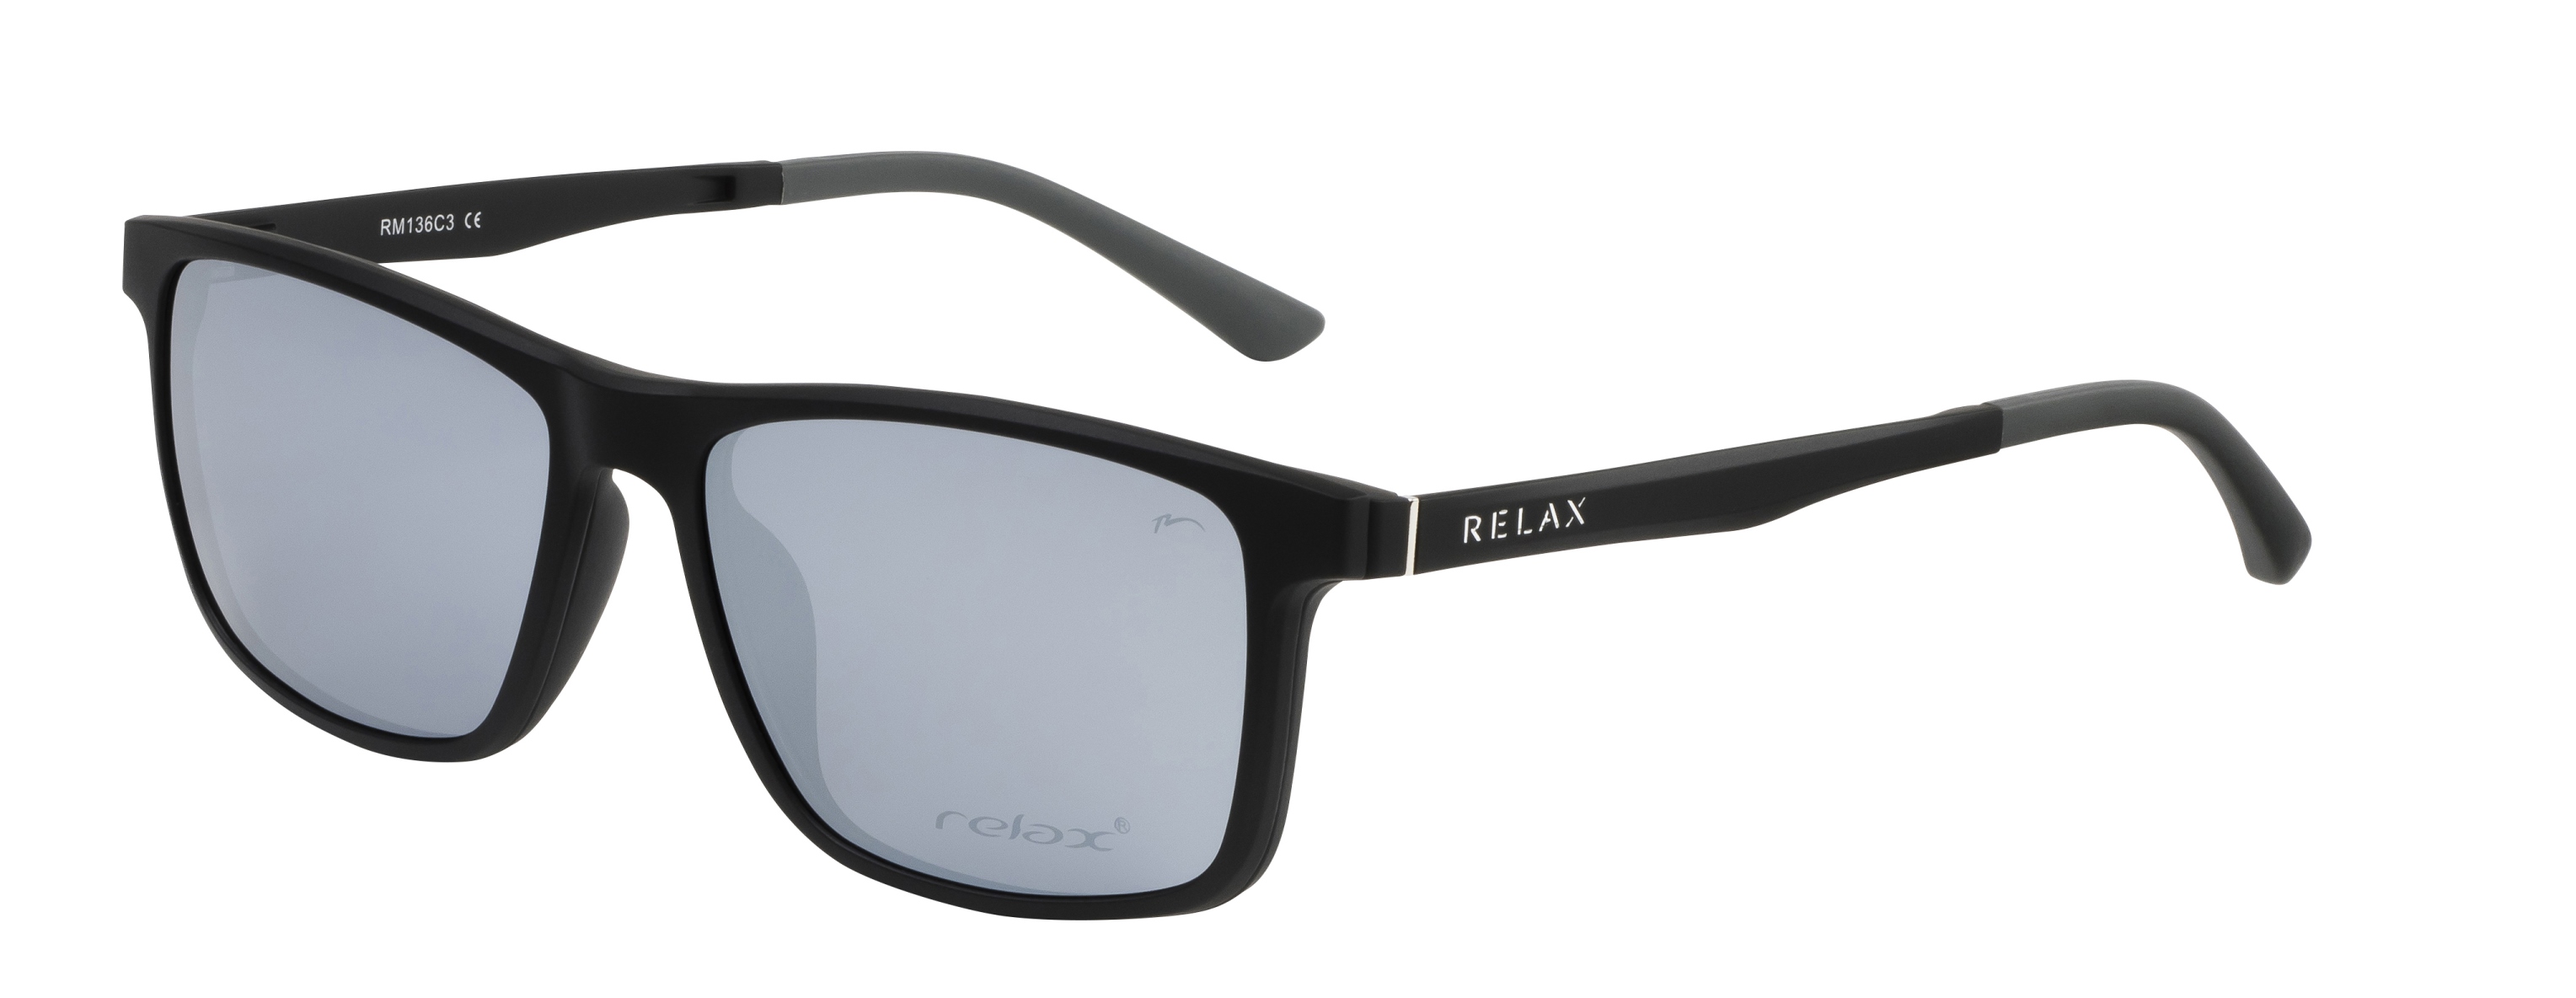 Optical frames Relax Port RM136C3